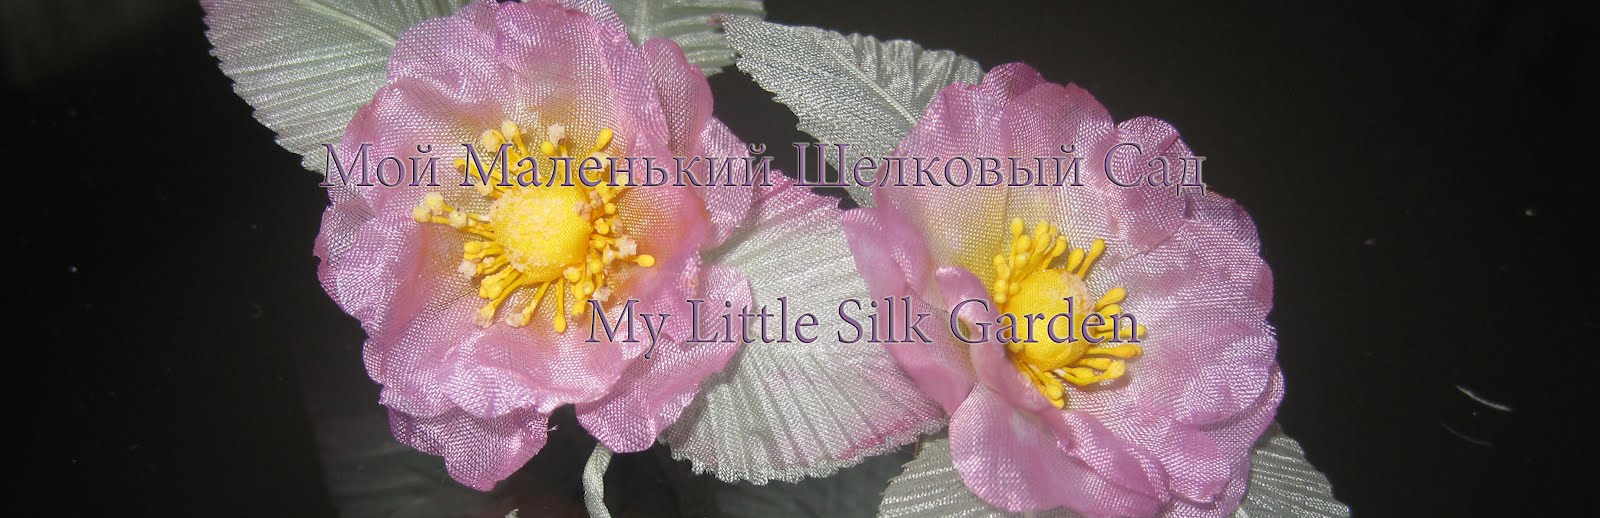 My little silk garden (Теплица)